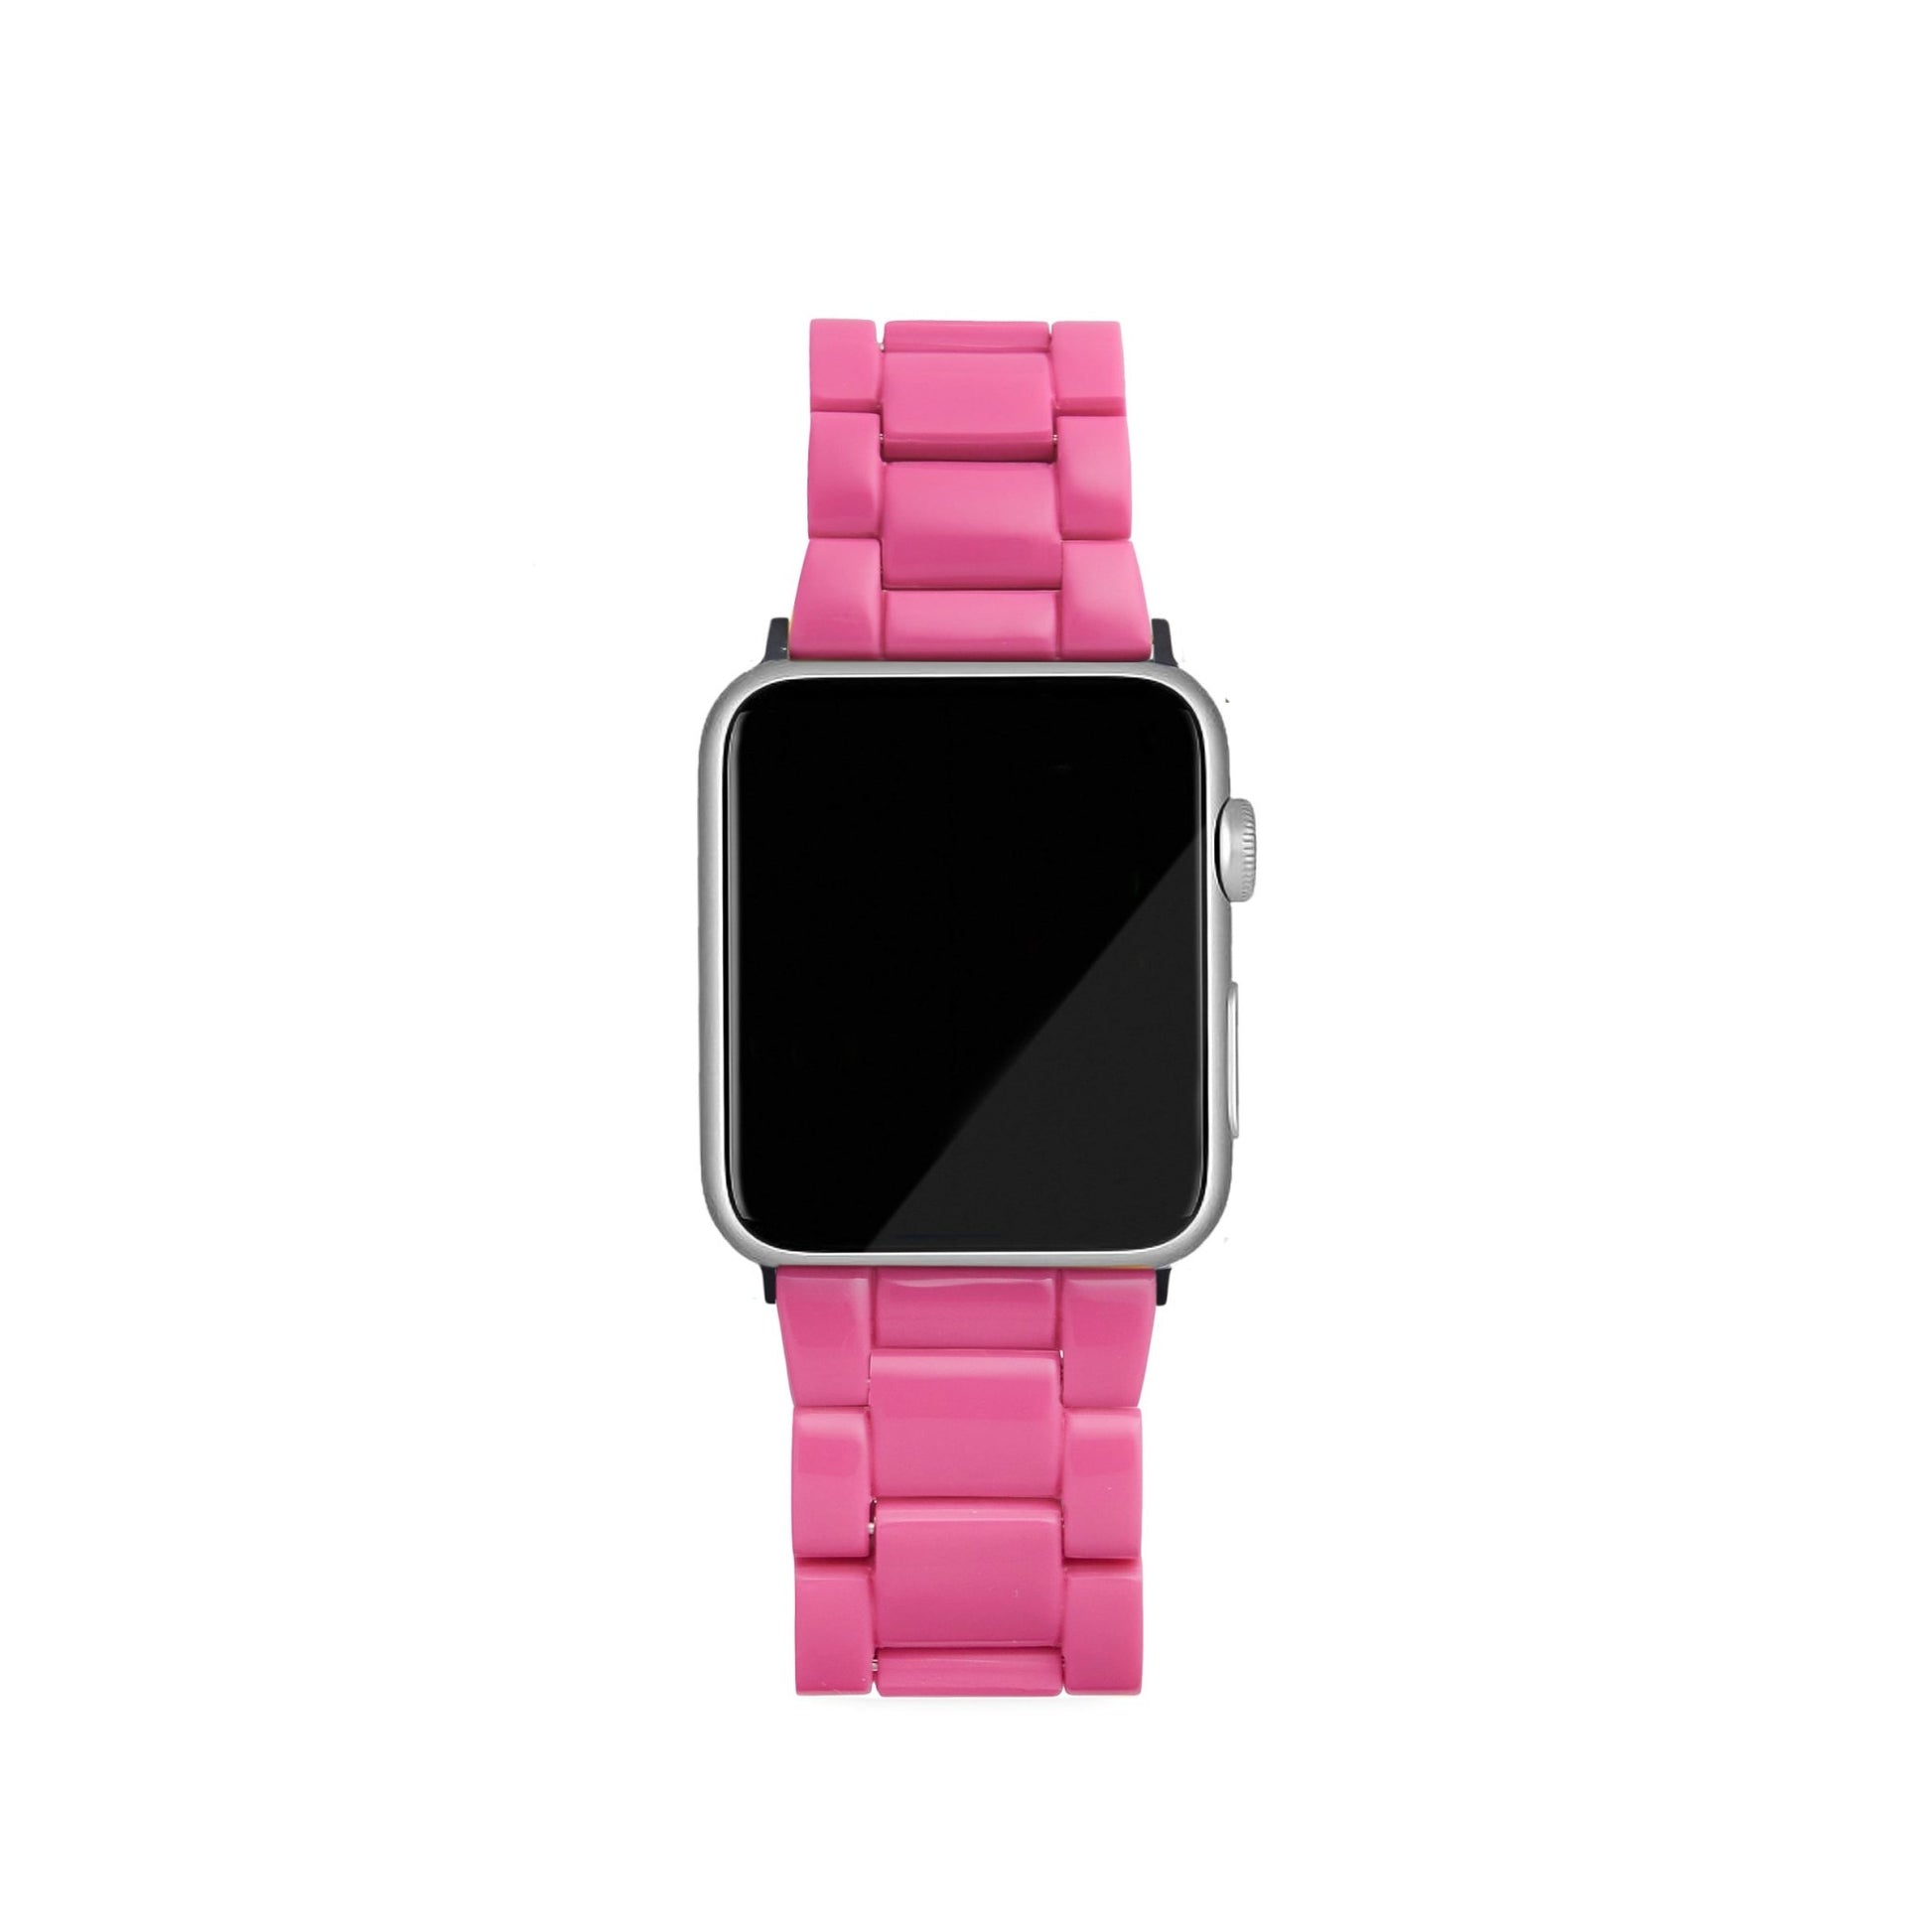 MACHETE Apple Watch Band in Neon Pink